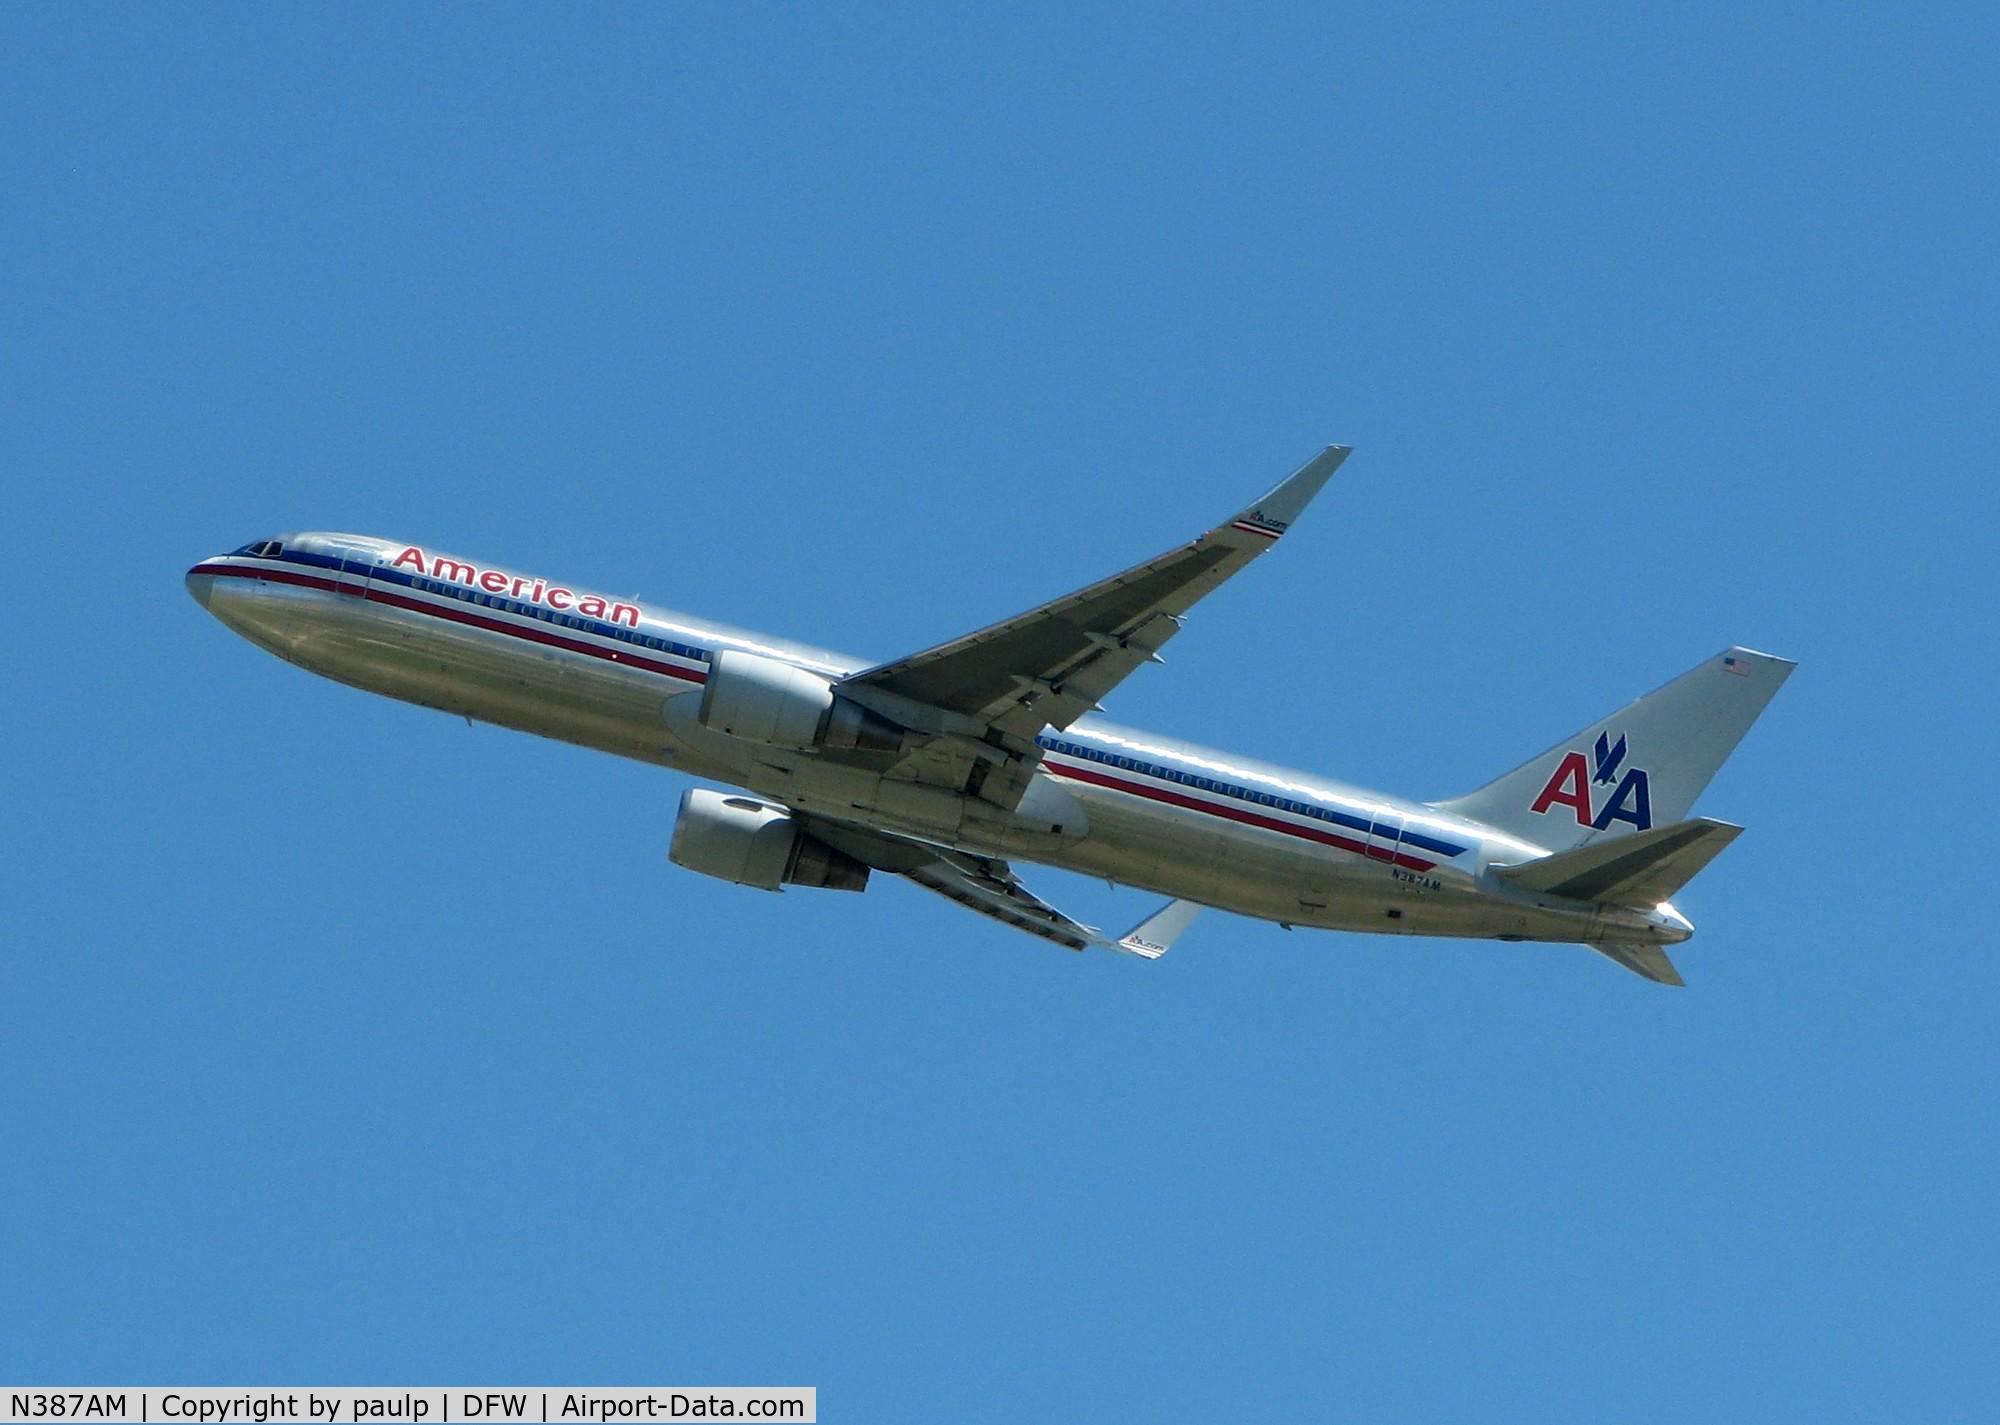 N387AM, 1994 Boeing 767-323 C/N 27184, American 767 with winglets departing DFW.